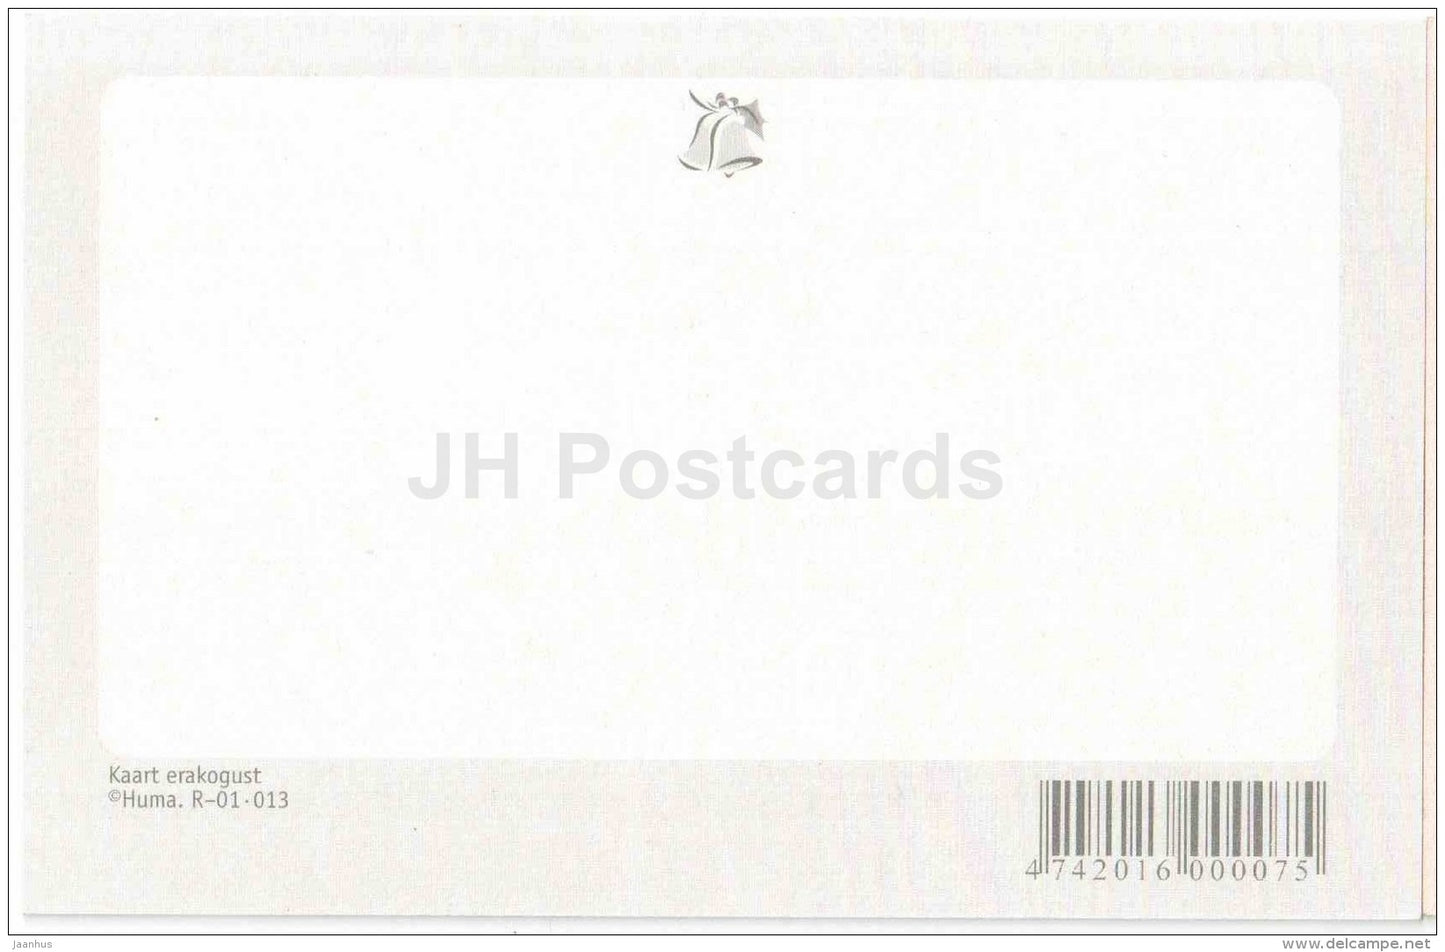 Christmas Greeting Card - bullfinch - bird - old postcard reproduction - Estonia - unused - JH Postcards